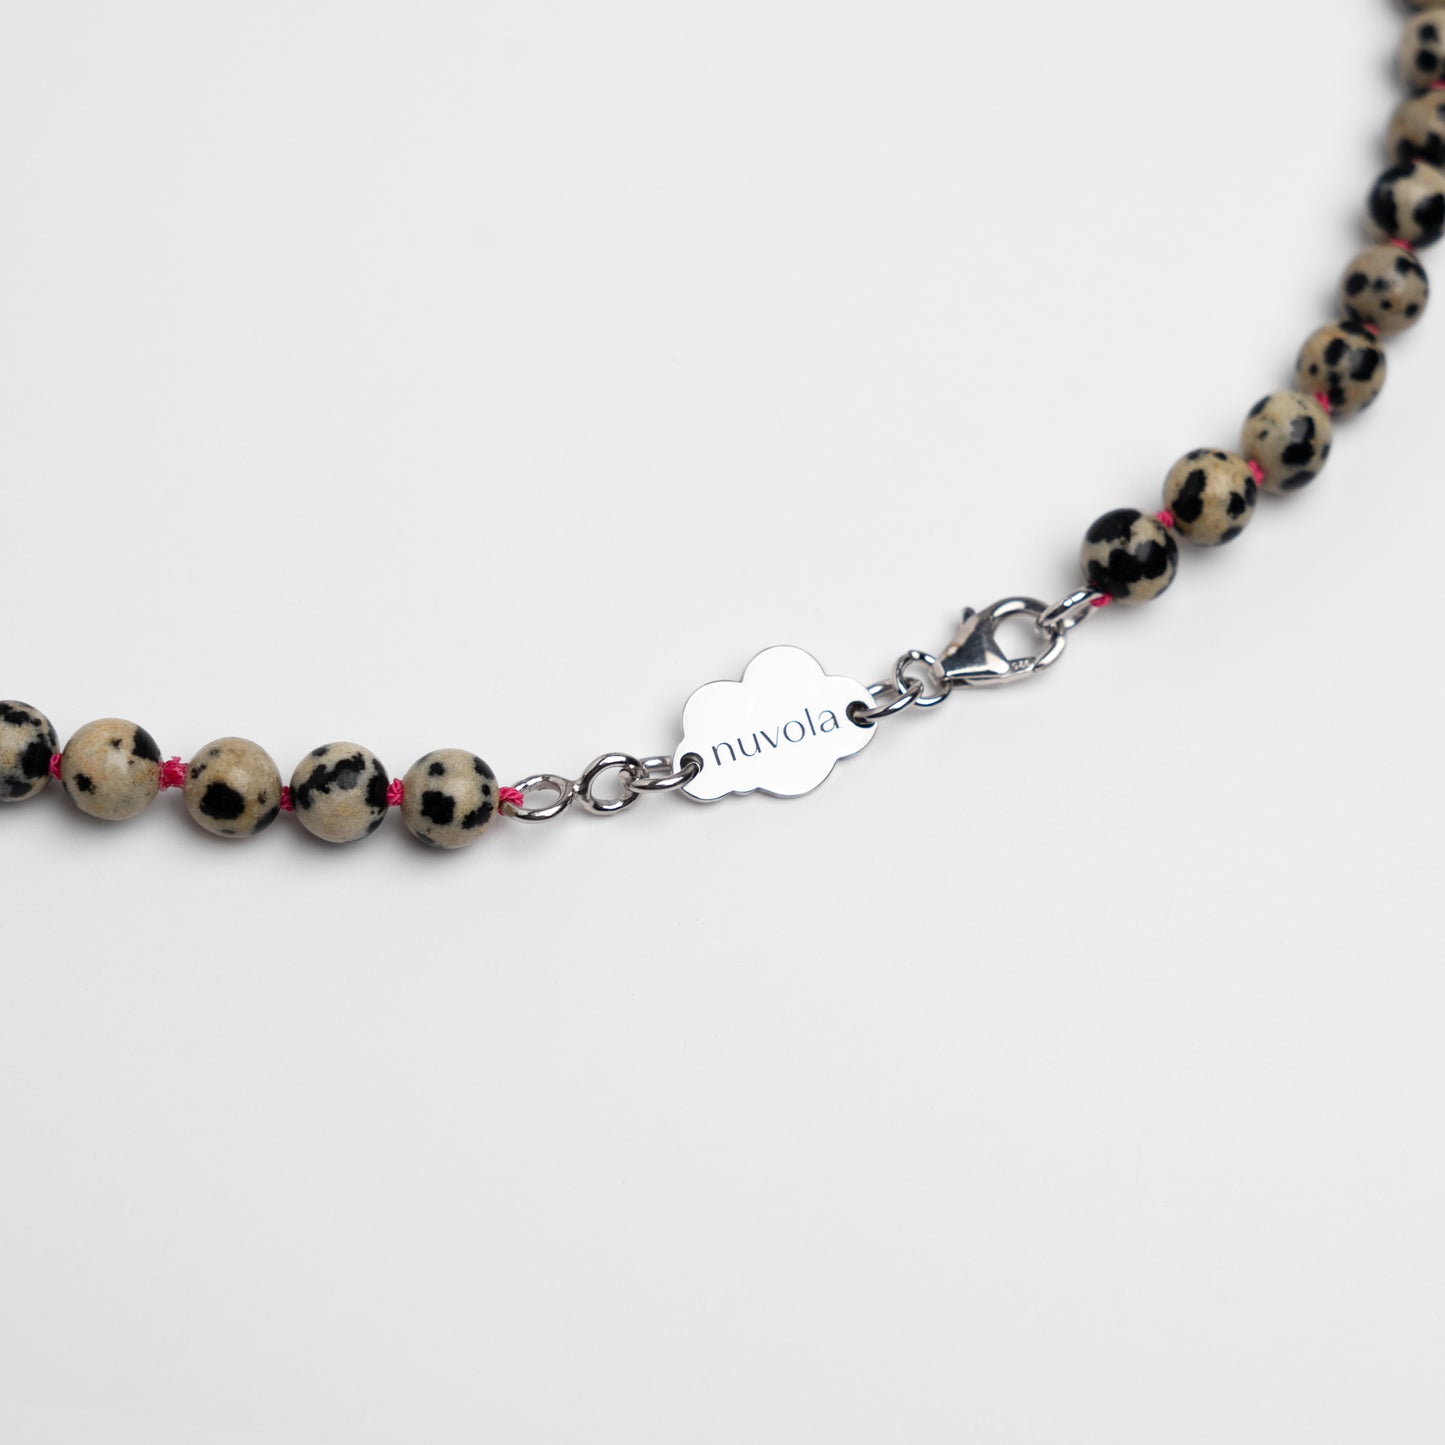 Dalmatian jasper necklace